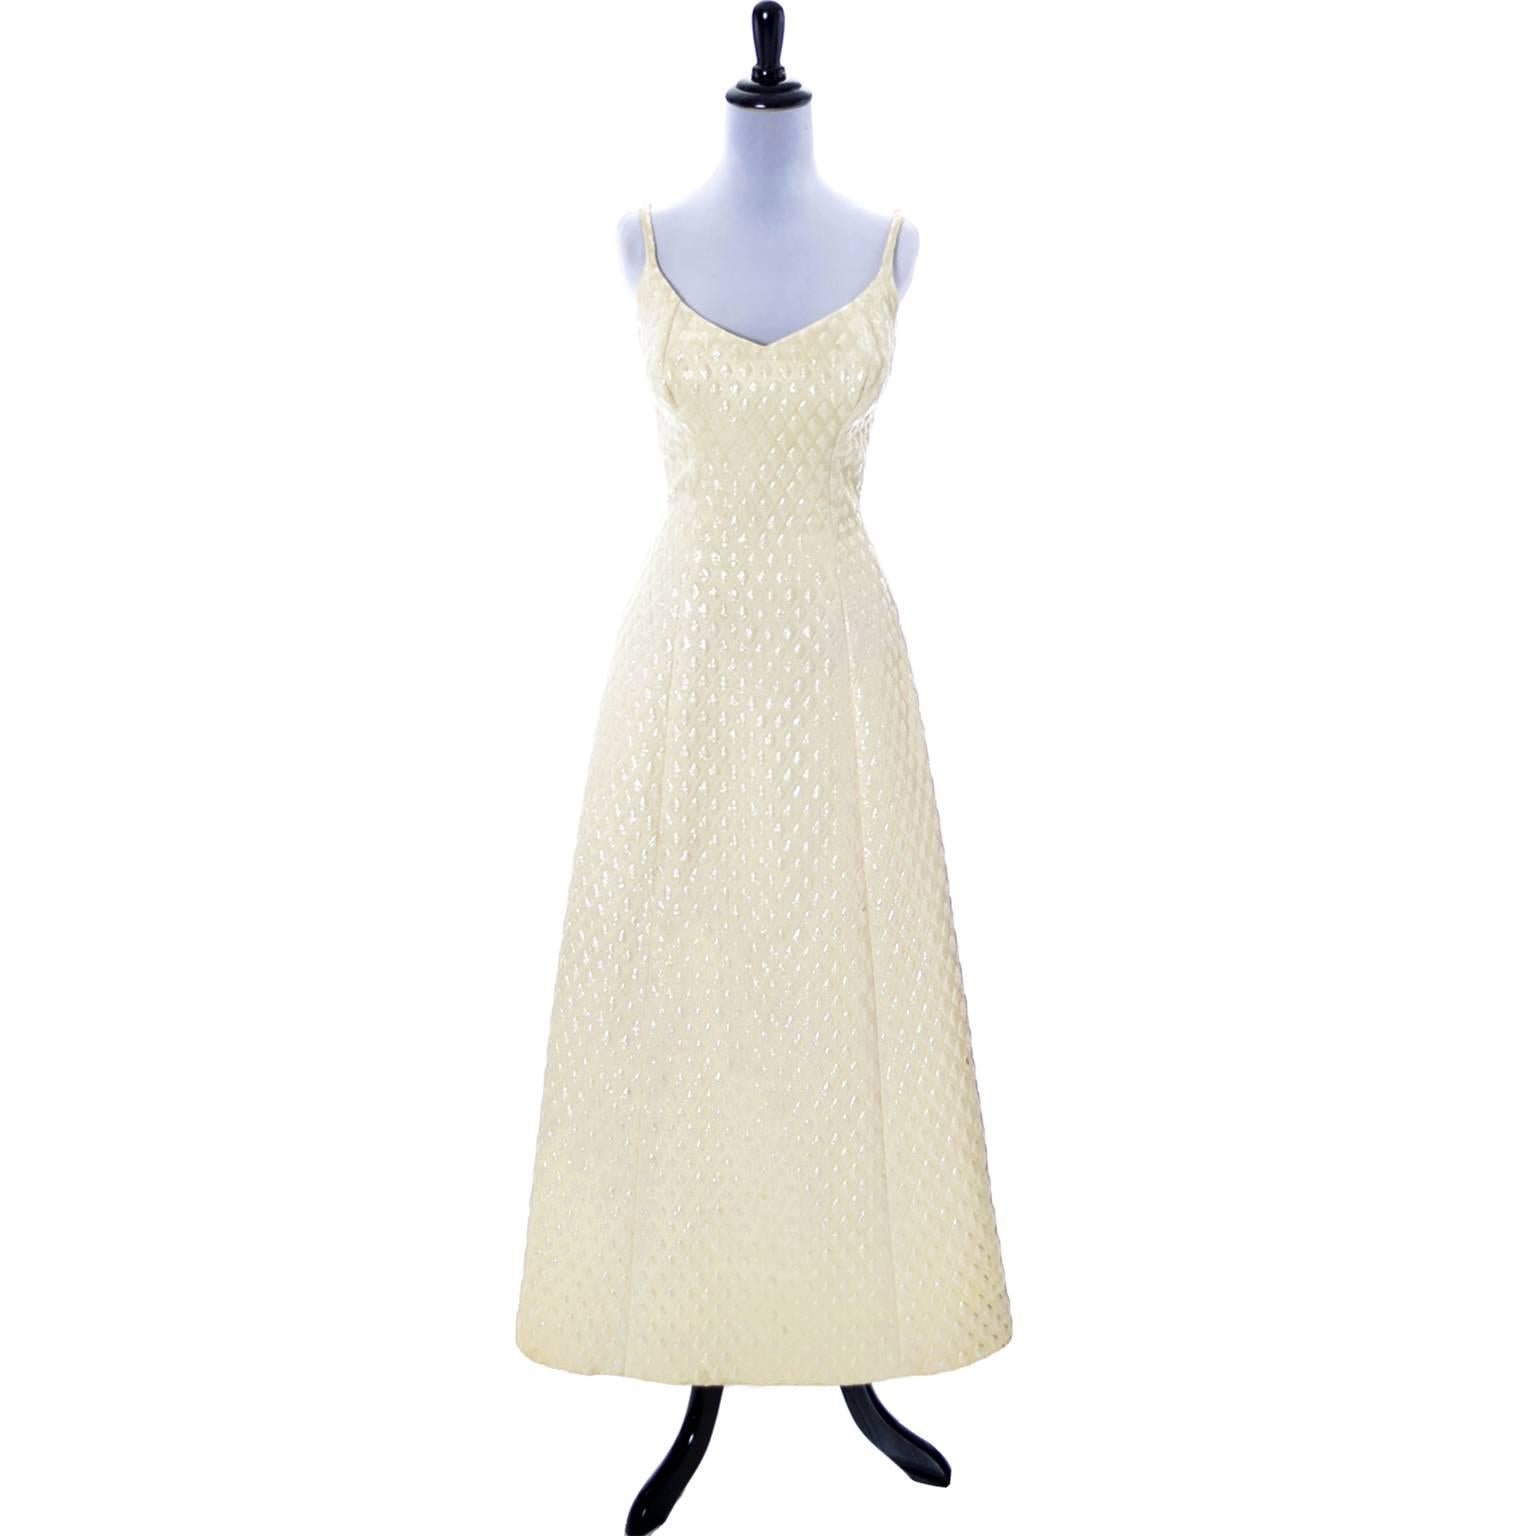 Women's 1960s Jacques Heim Vintage Dress Creamy Metallic Diamond Pattern Evening Gown